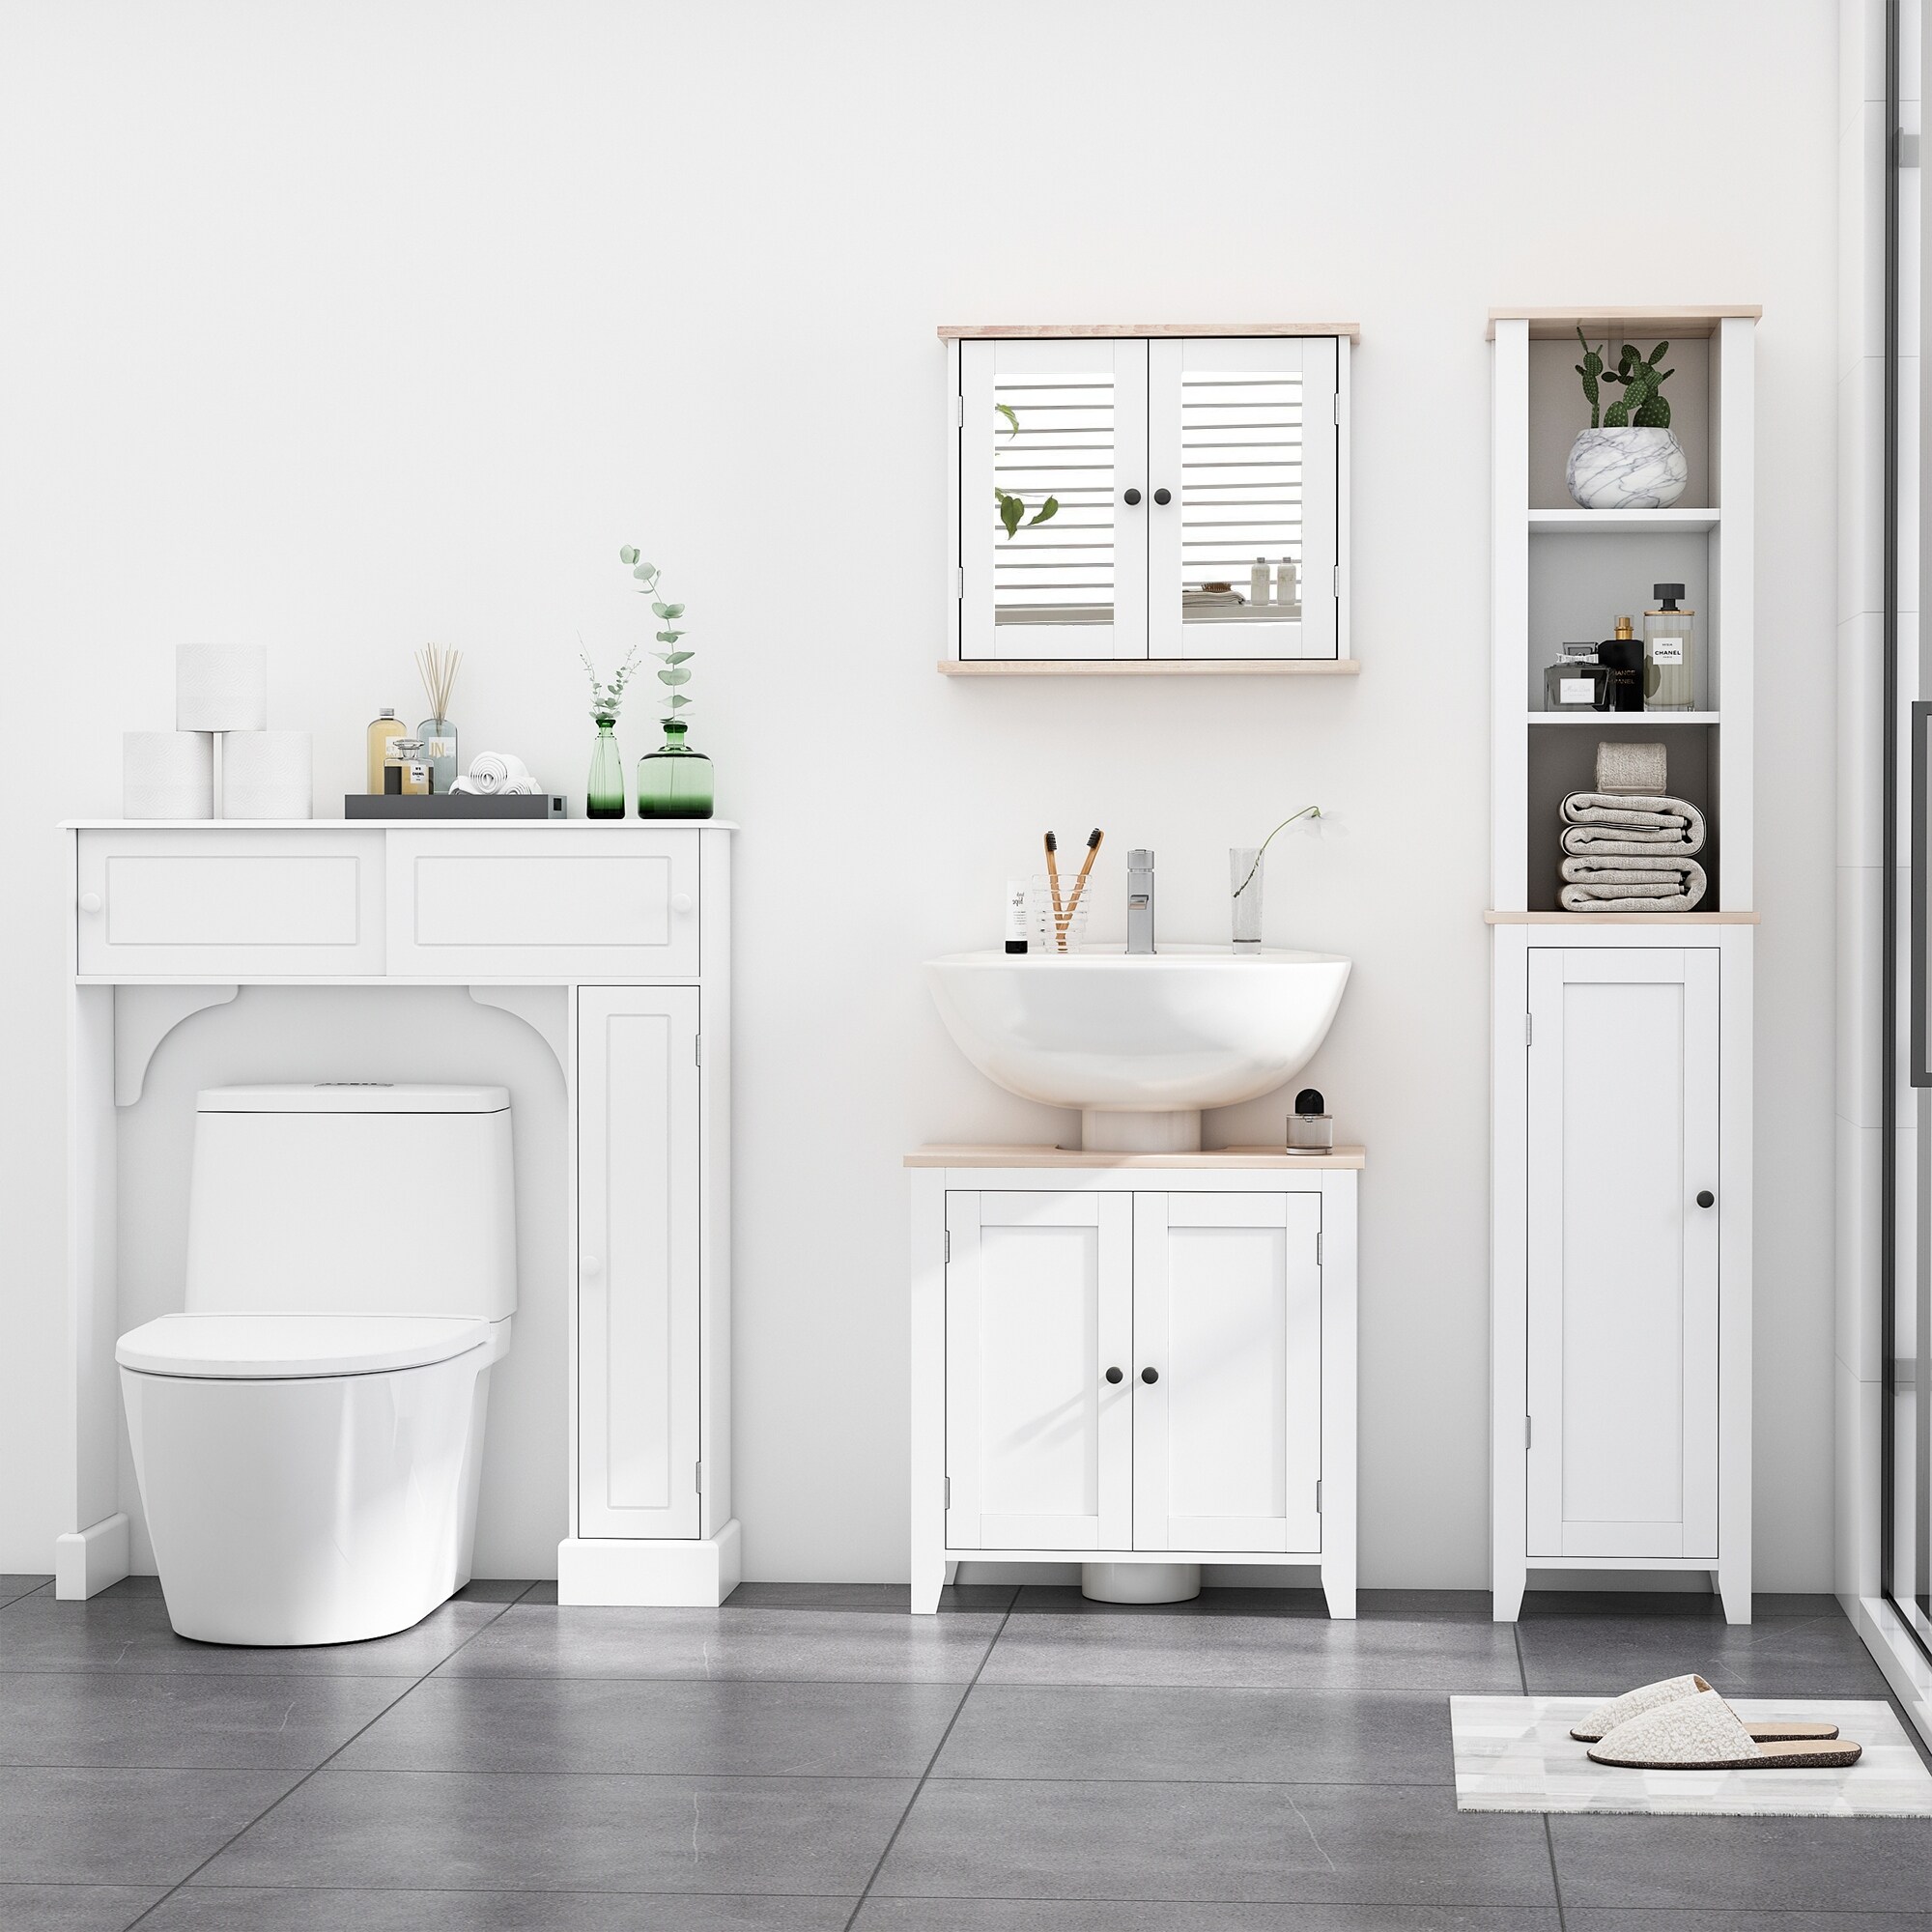 https://ak1.ostkcdn.com/images/products/is/images/direct/55f866ff62d65f5046c466c78de78ced00994687/Kleankin-Under-Sink-Bathroom-Sink-Cabinet%2C-Storage-Unit-with-U-Shape-and-Adjustable-Internal-Shelf%2C-White.jpg